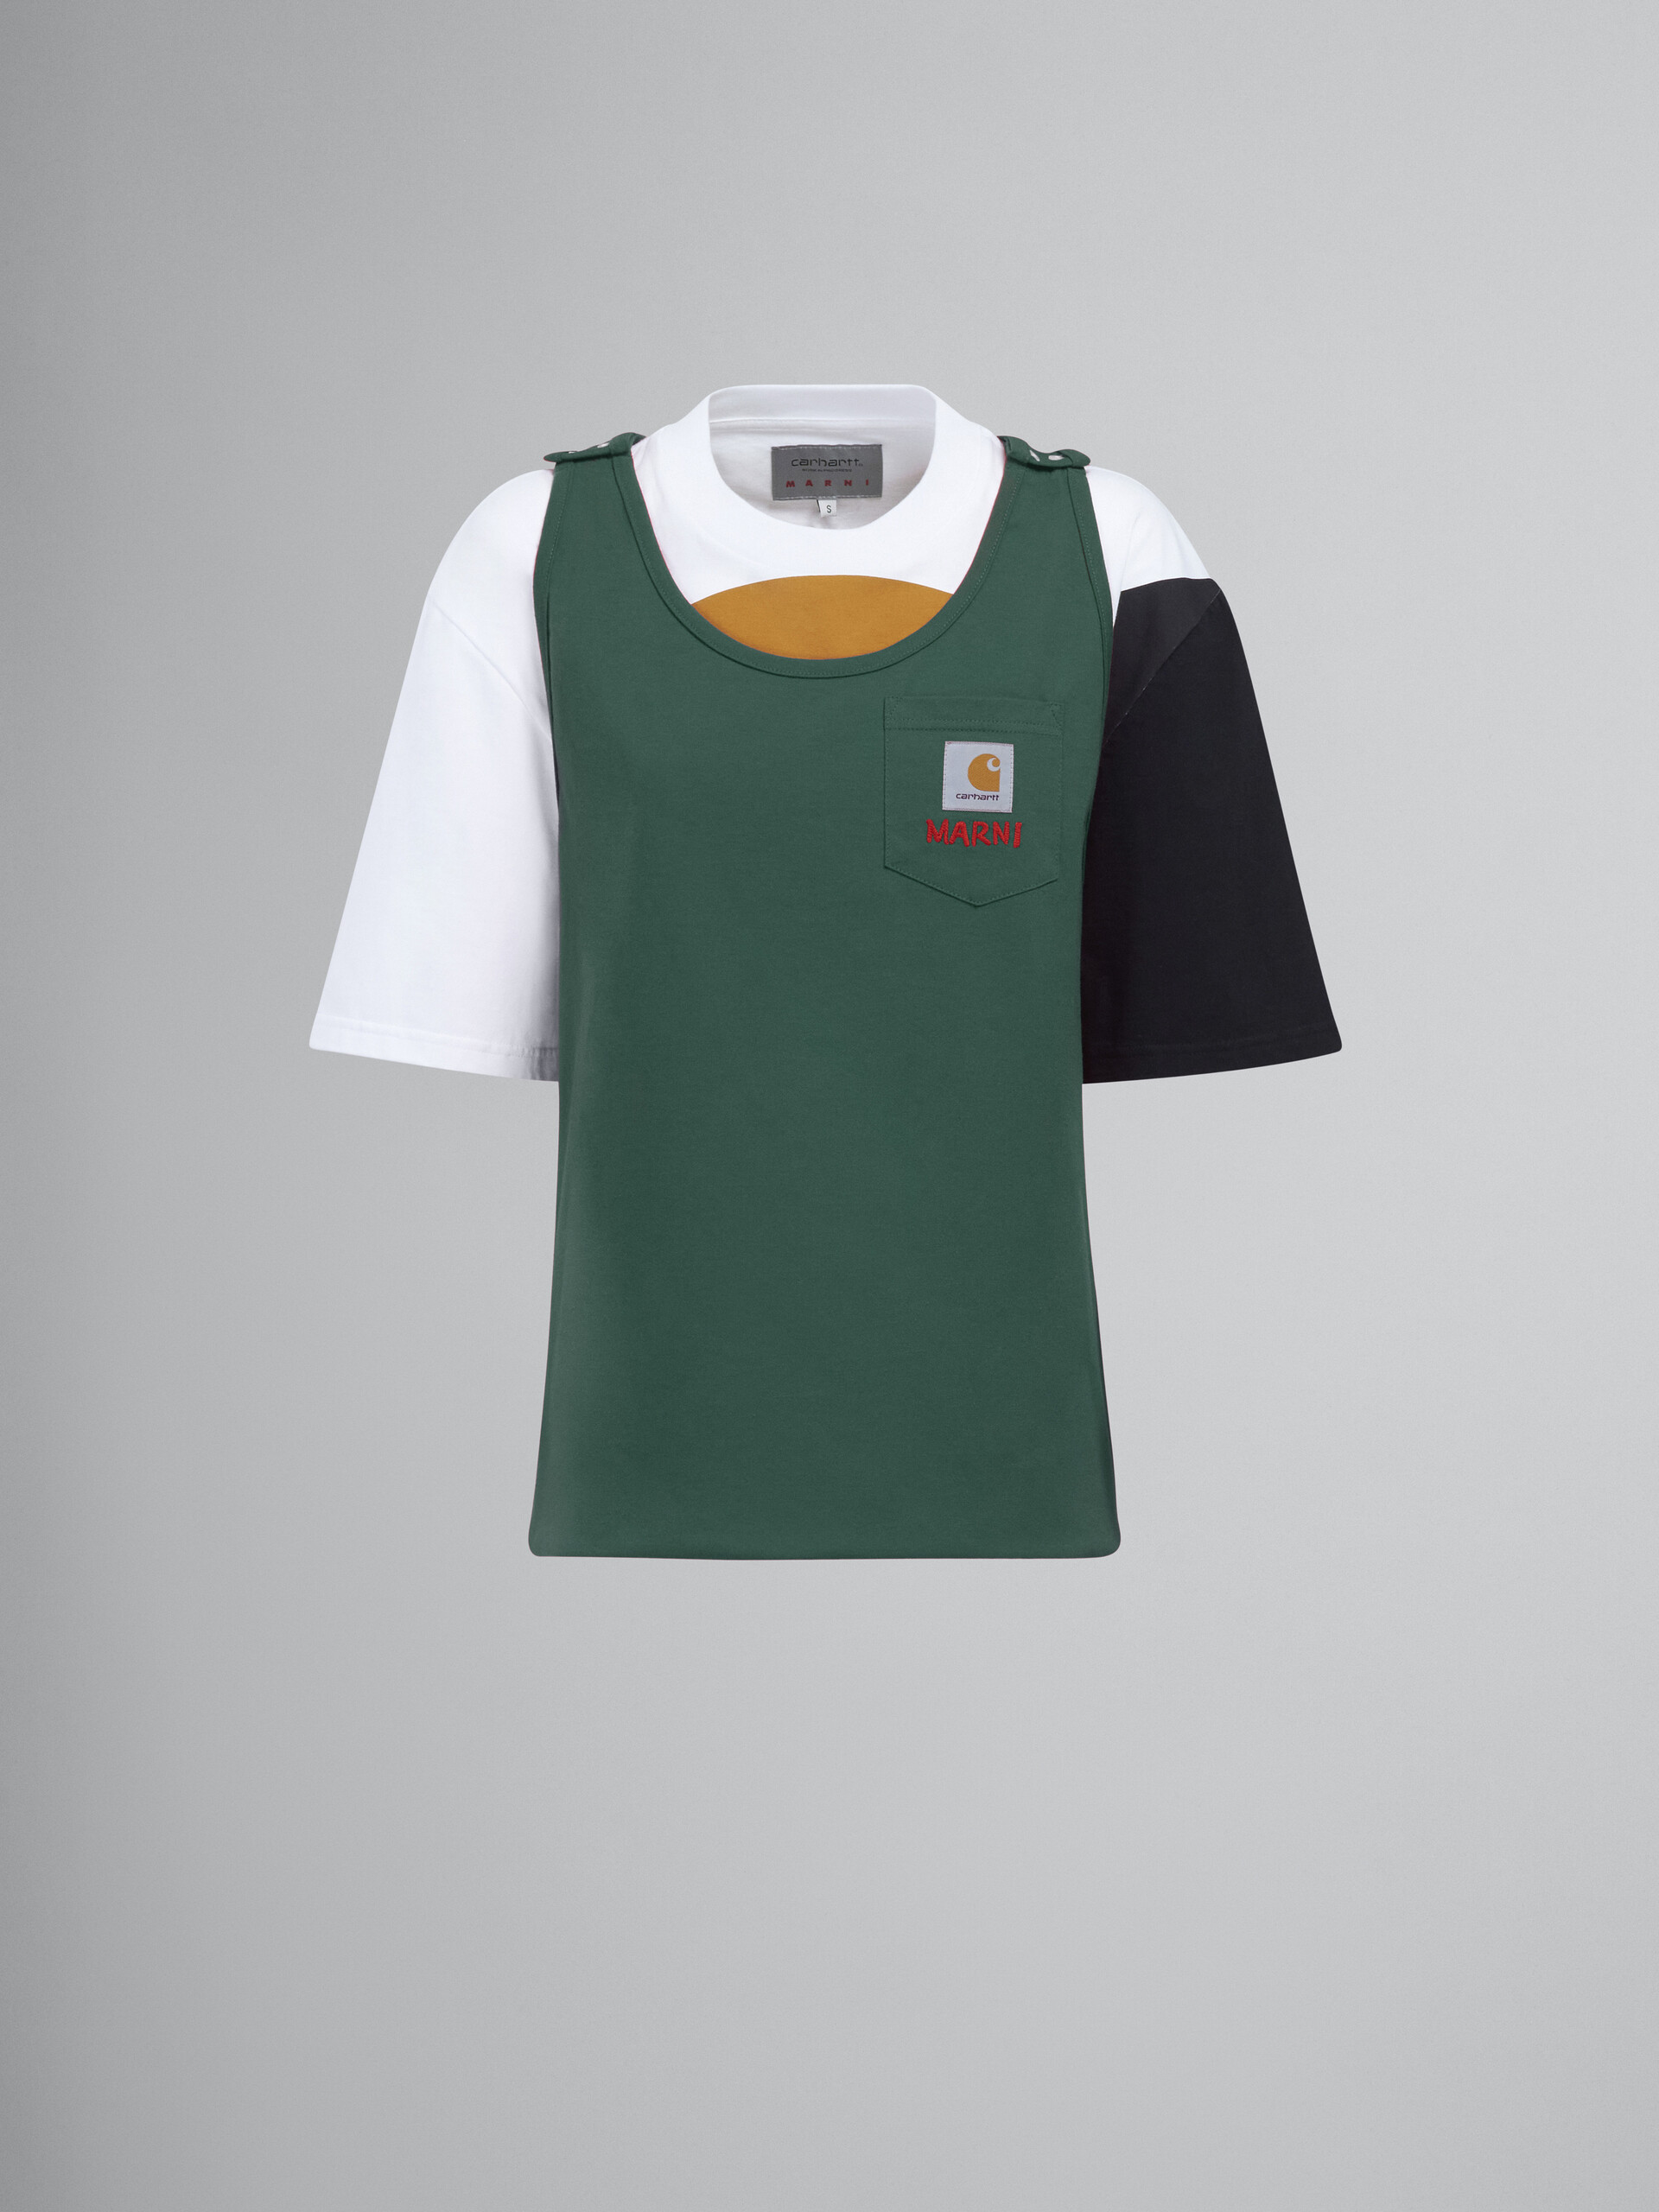 MARNI x CARHARTT WIP - T-shirt vert avec logo - T-shirts - Image 1